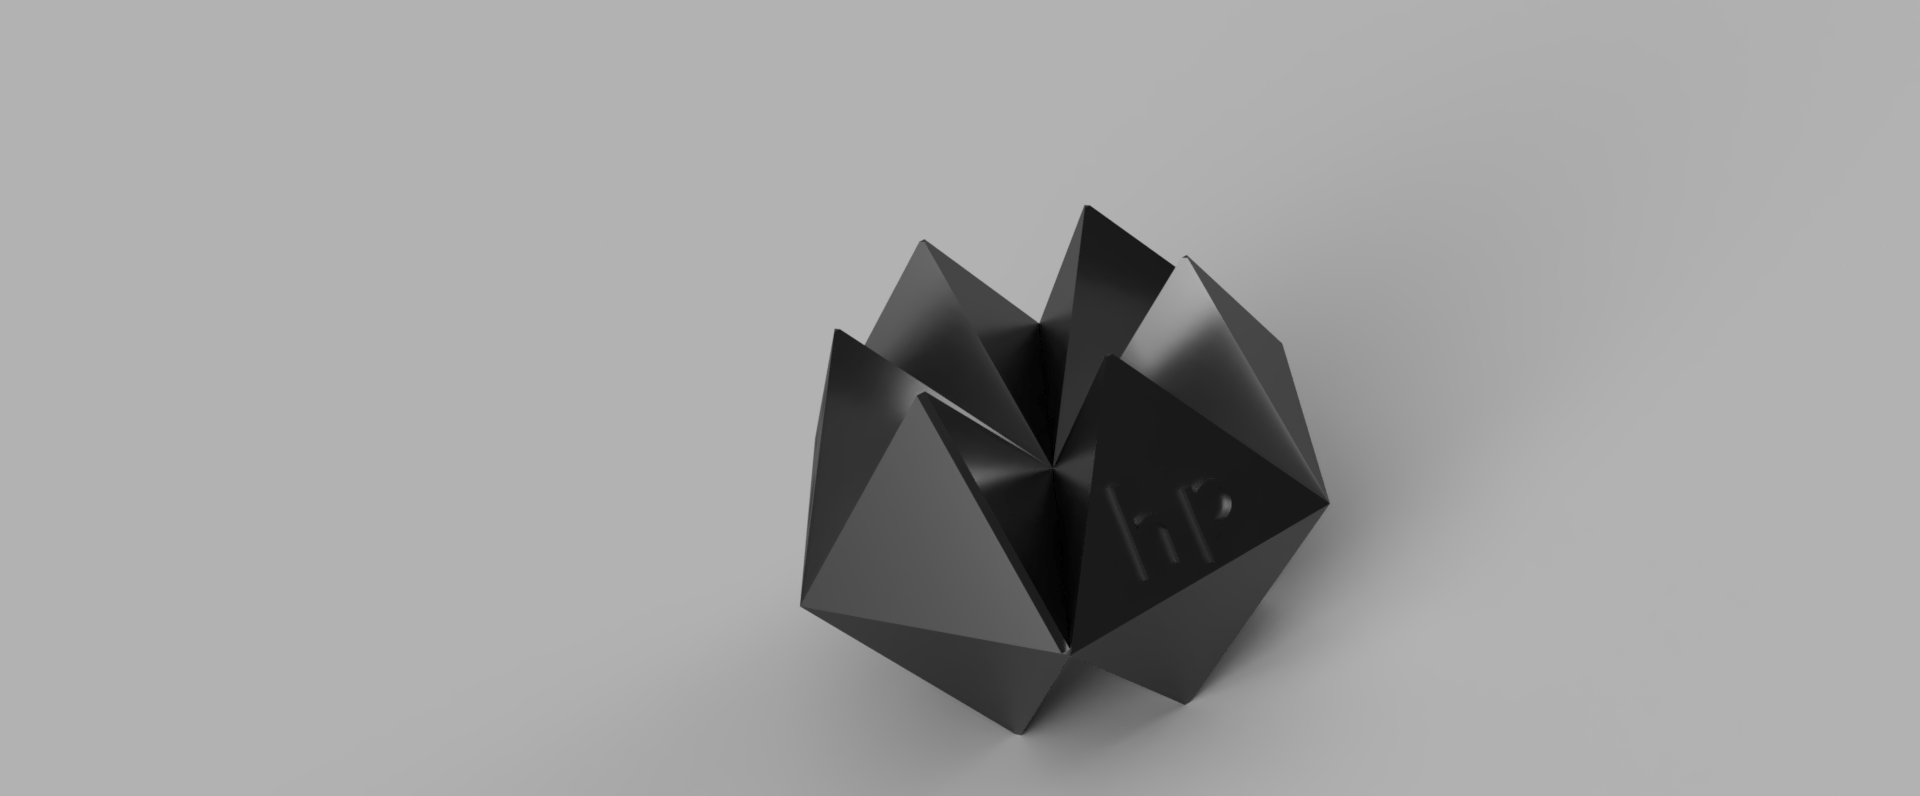 origami.png Download free STL file Origami # 3DSPIRIT • 3D printable template, rem_gre